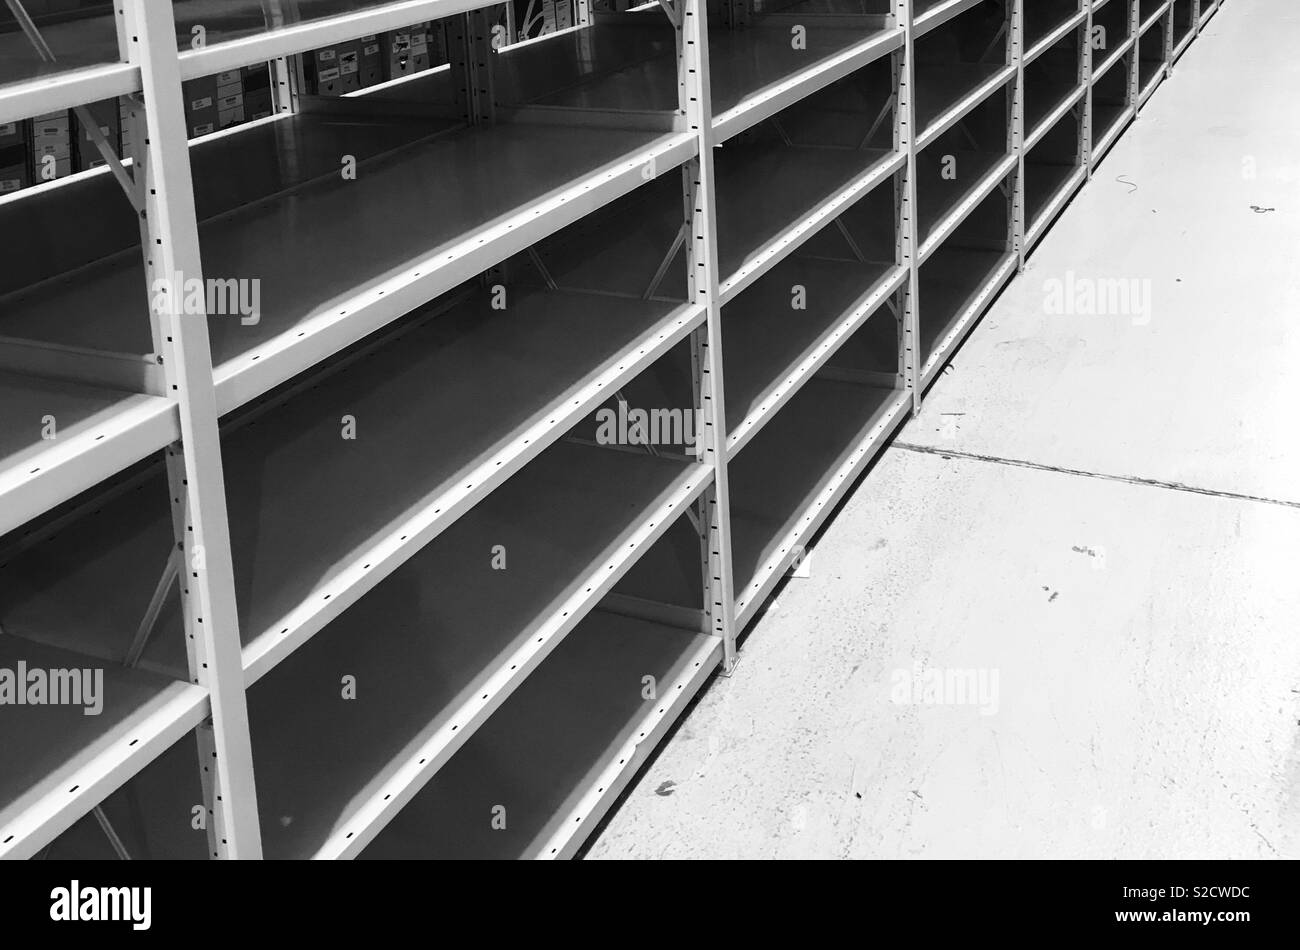 Empty warehouse shelving Stock Photo